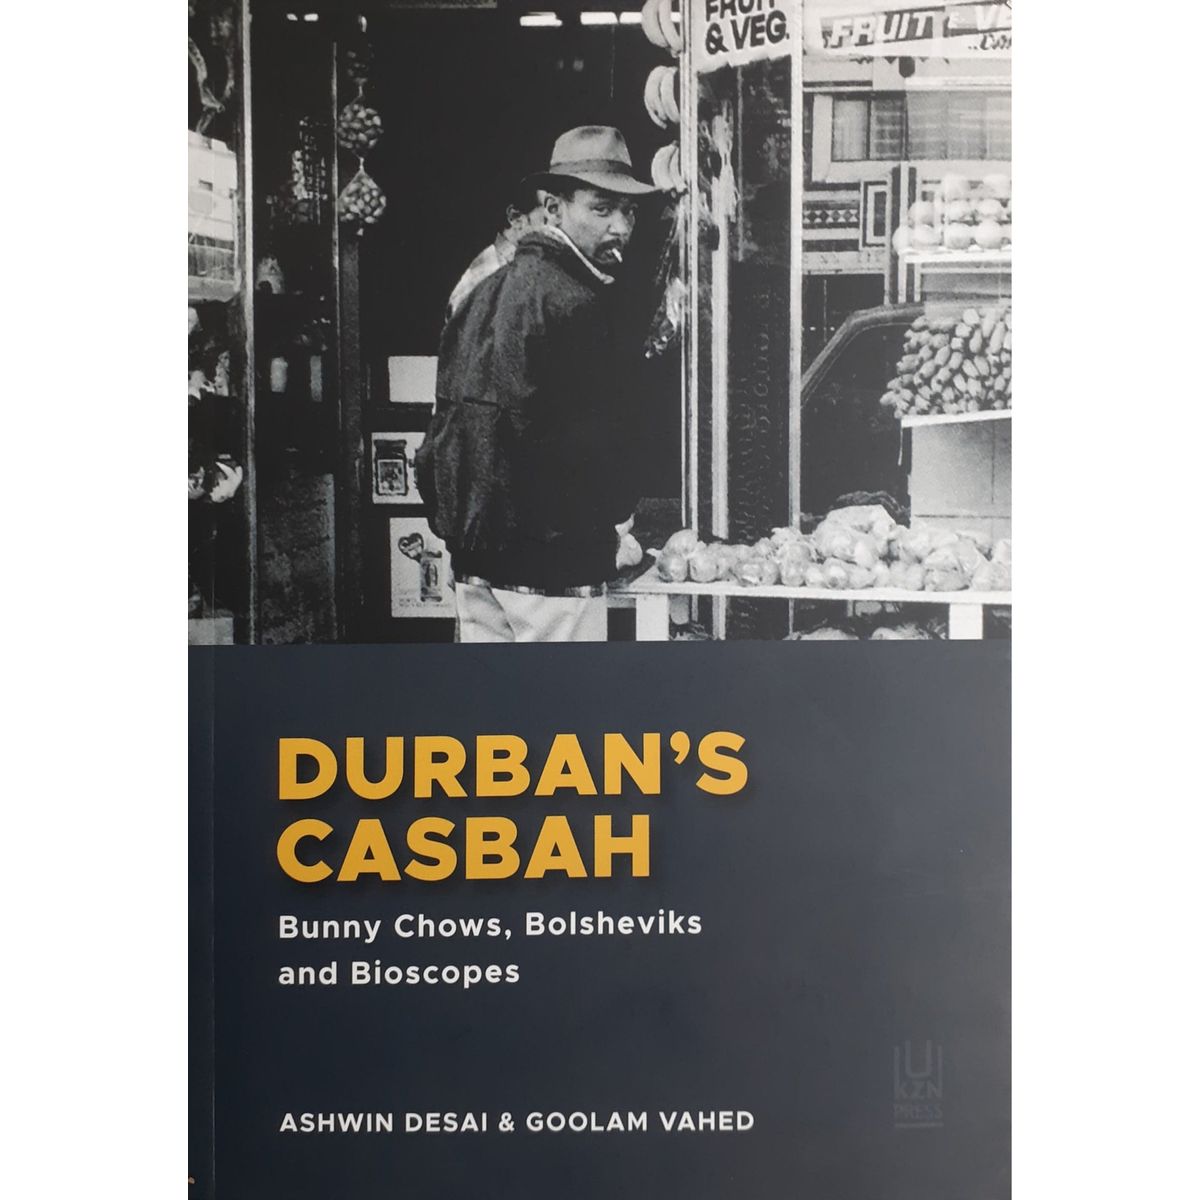 ISBN: 9781869145248 / 1869145240 - Durban's Casbah: Bunny Chows, Bolsheviks and Bioscopes by Ashwin Desai & Goolam Vahed [2023]